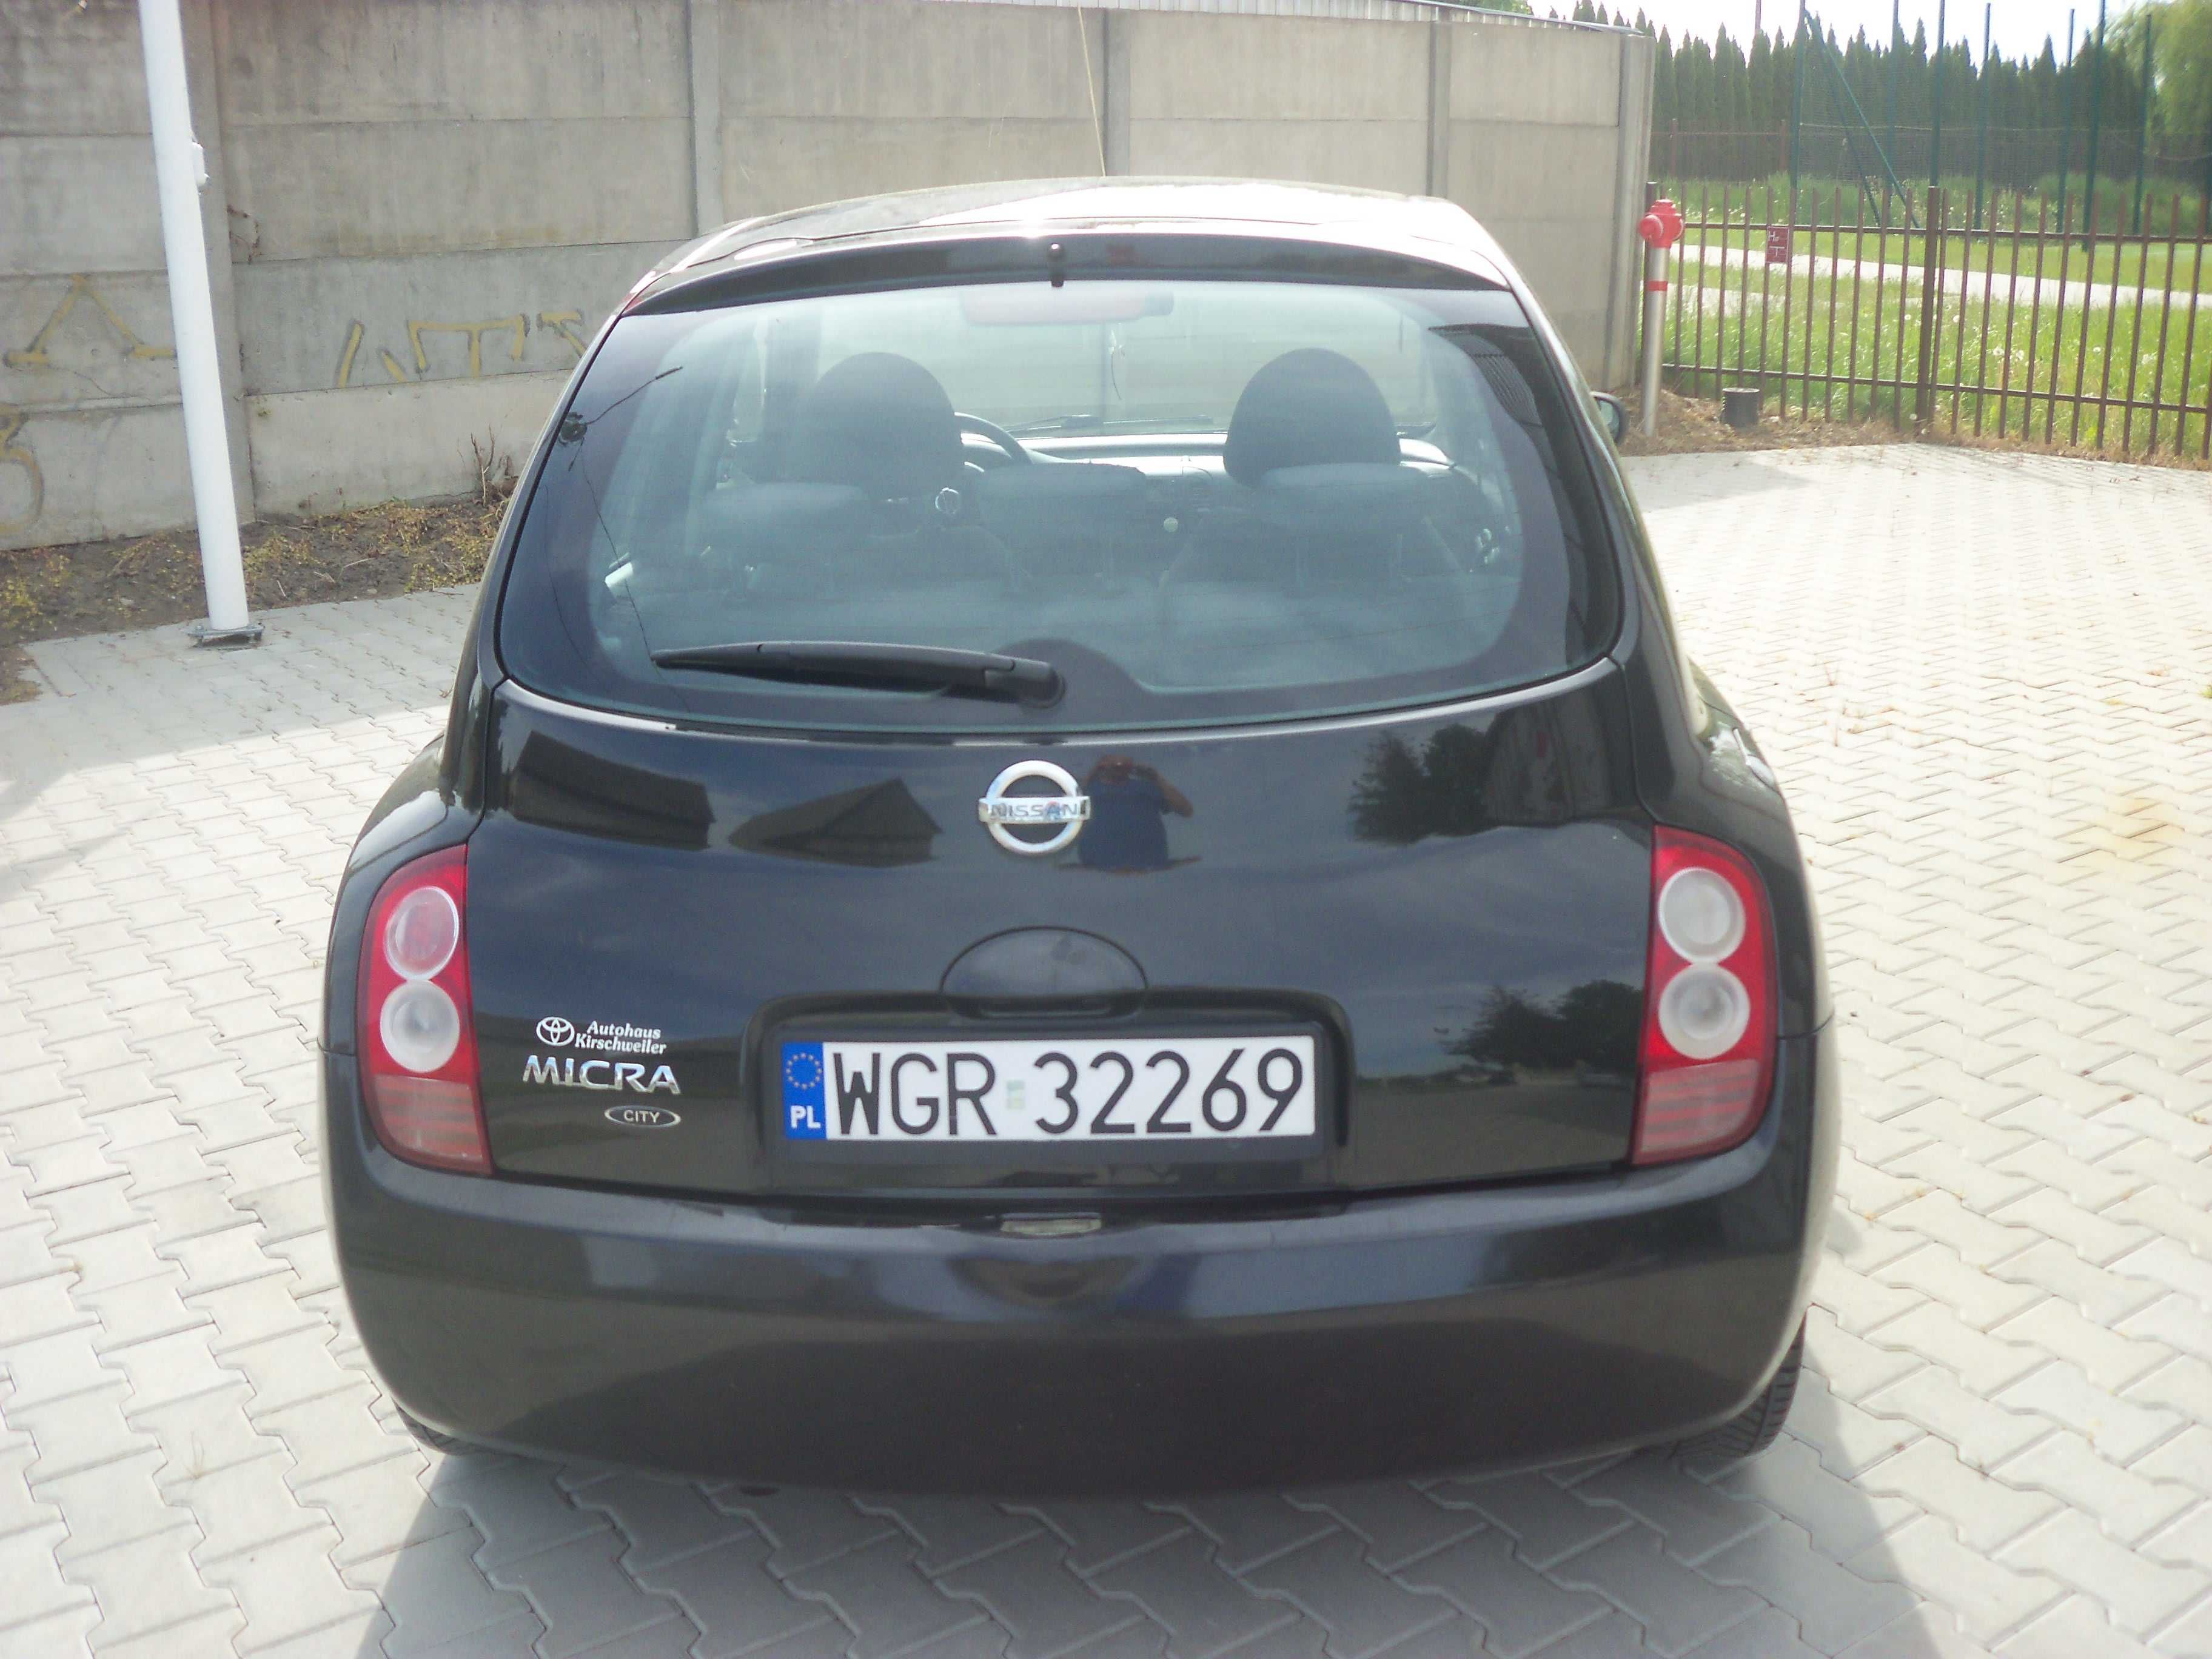 2005 Nissan micra